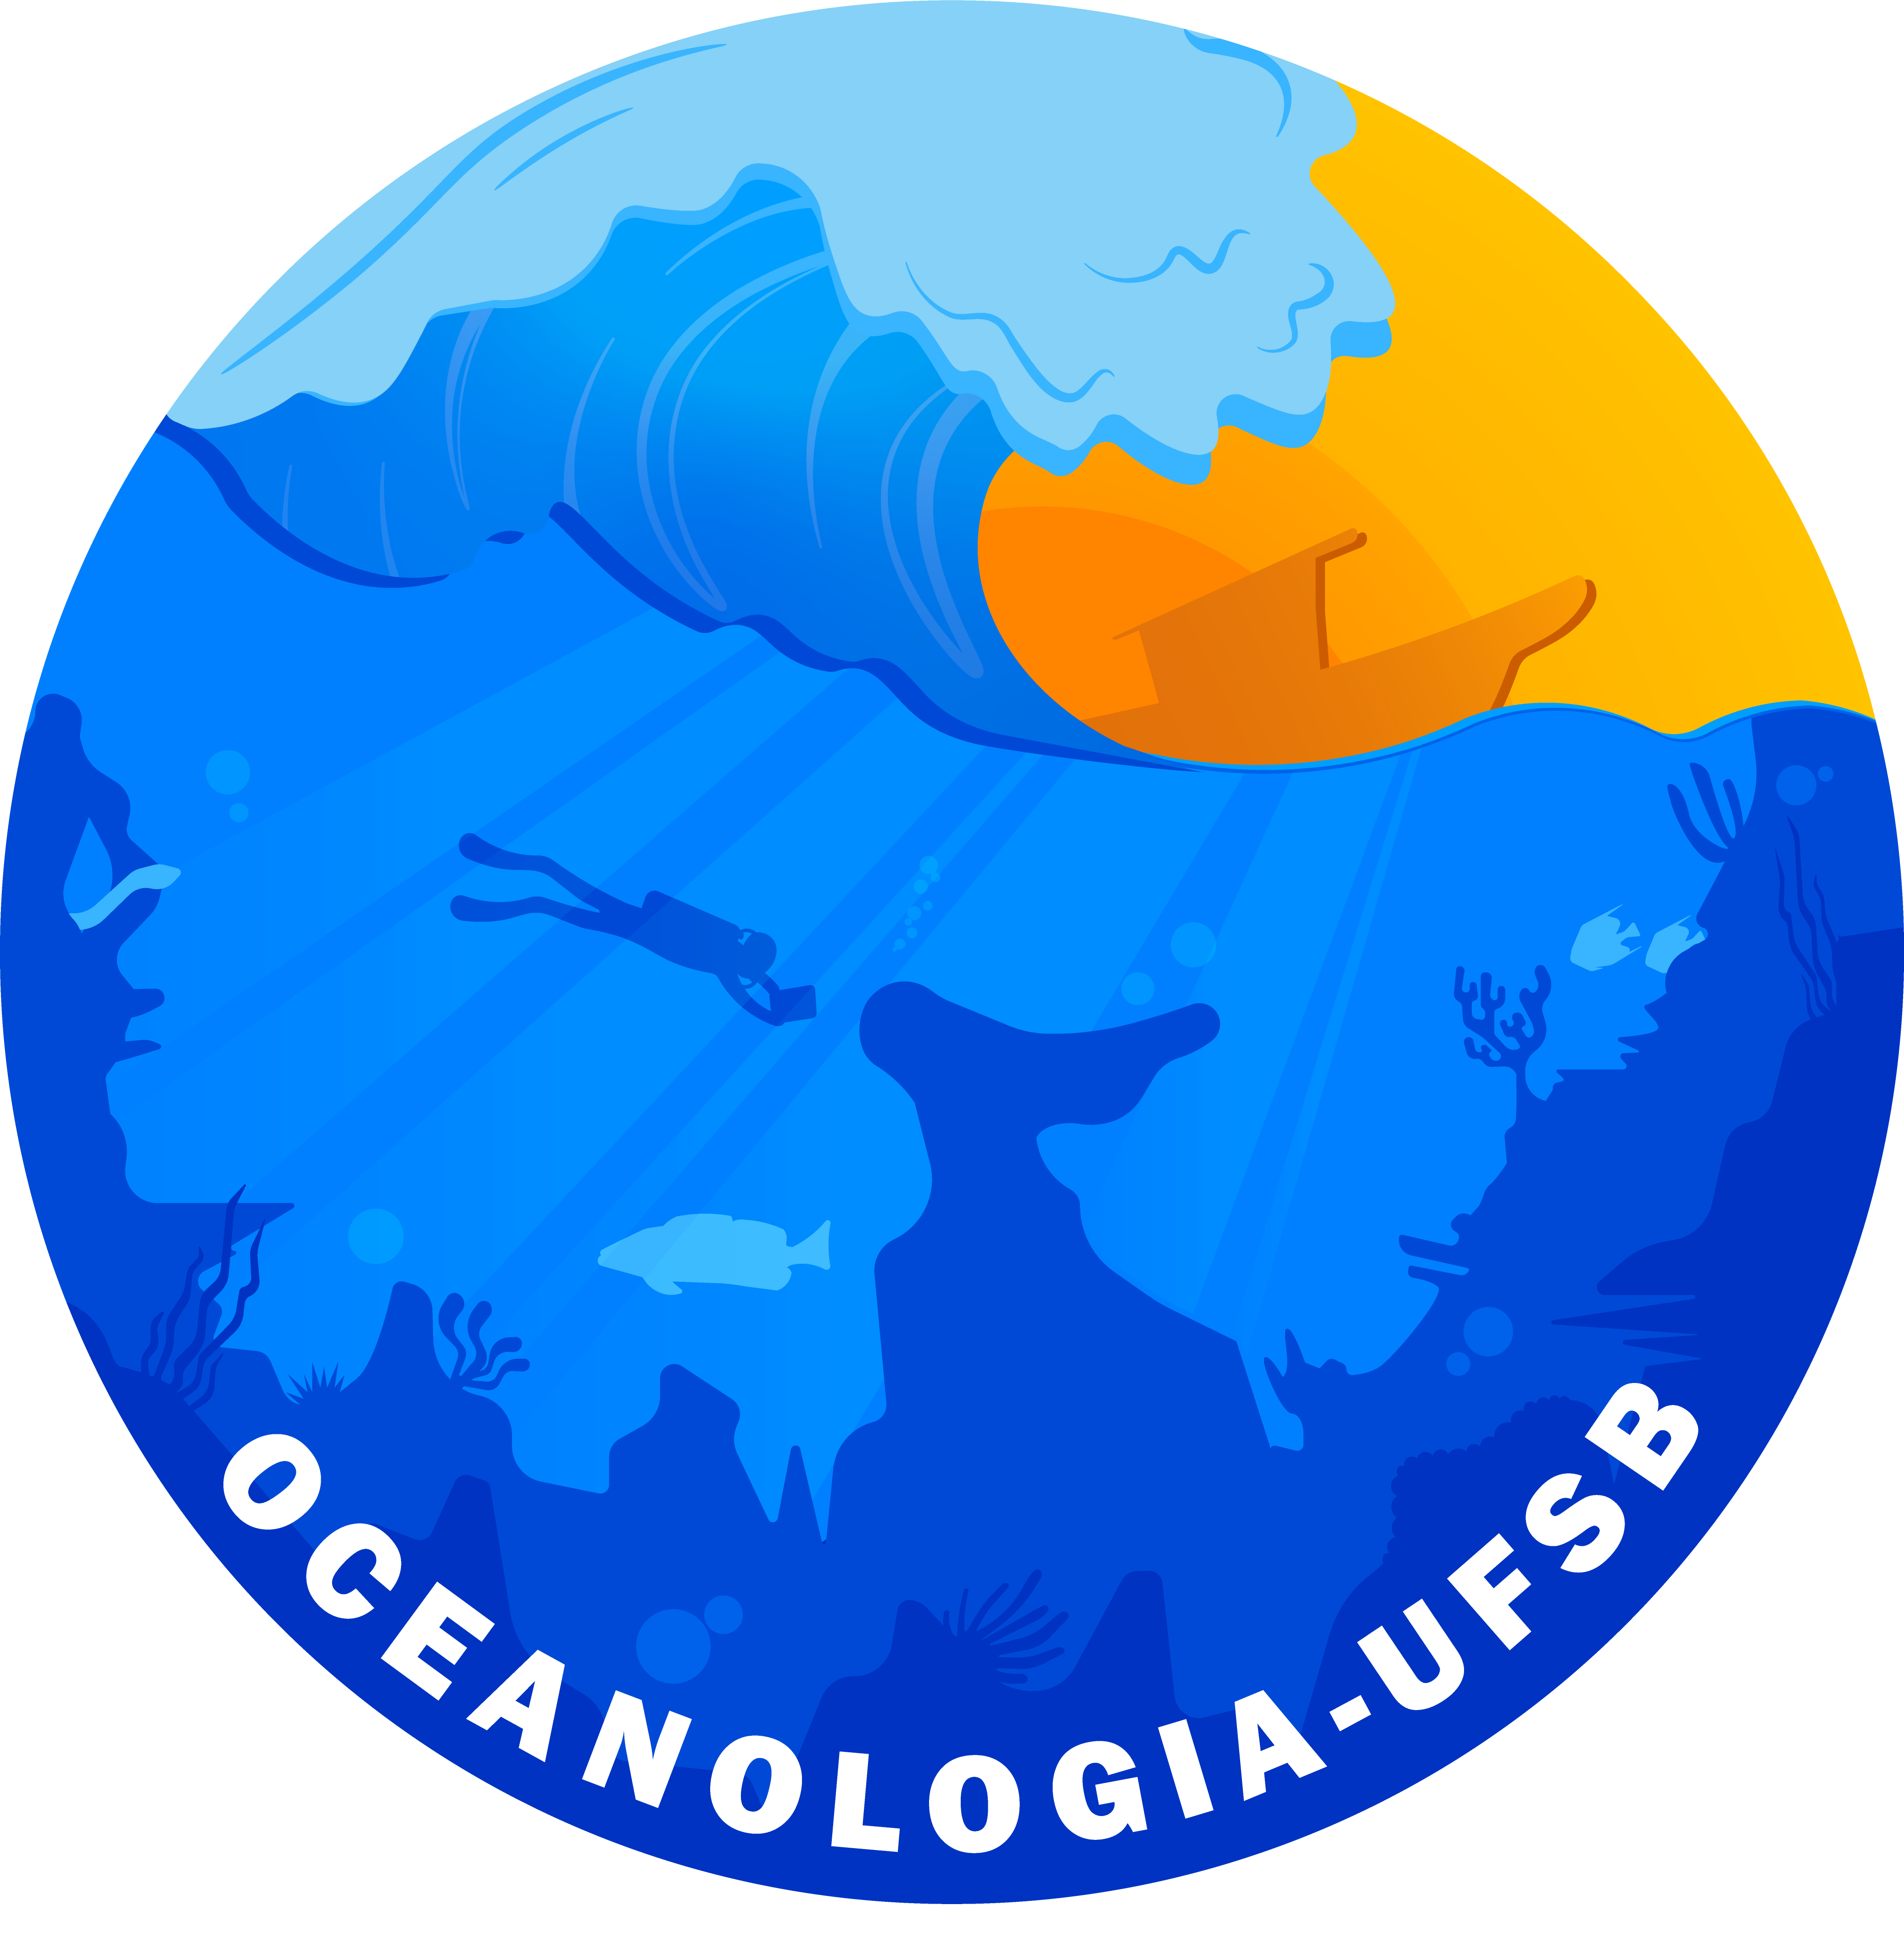 oceanologiaufsb logo redonda